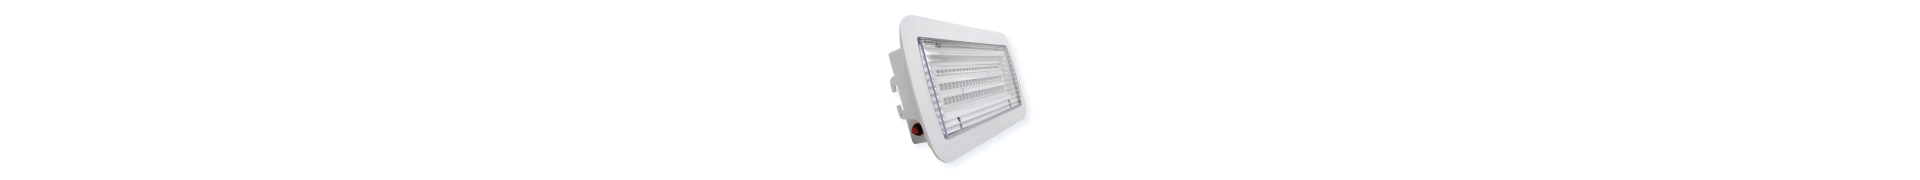 Comprar Luces Emergencia LED al Mejor Precio | LED Atomant